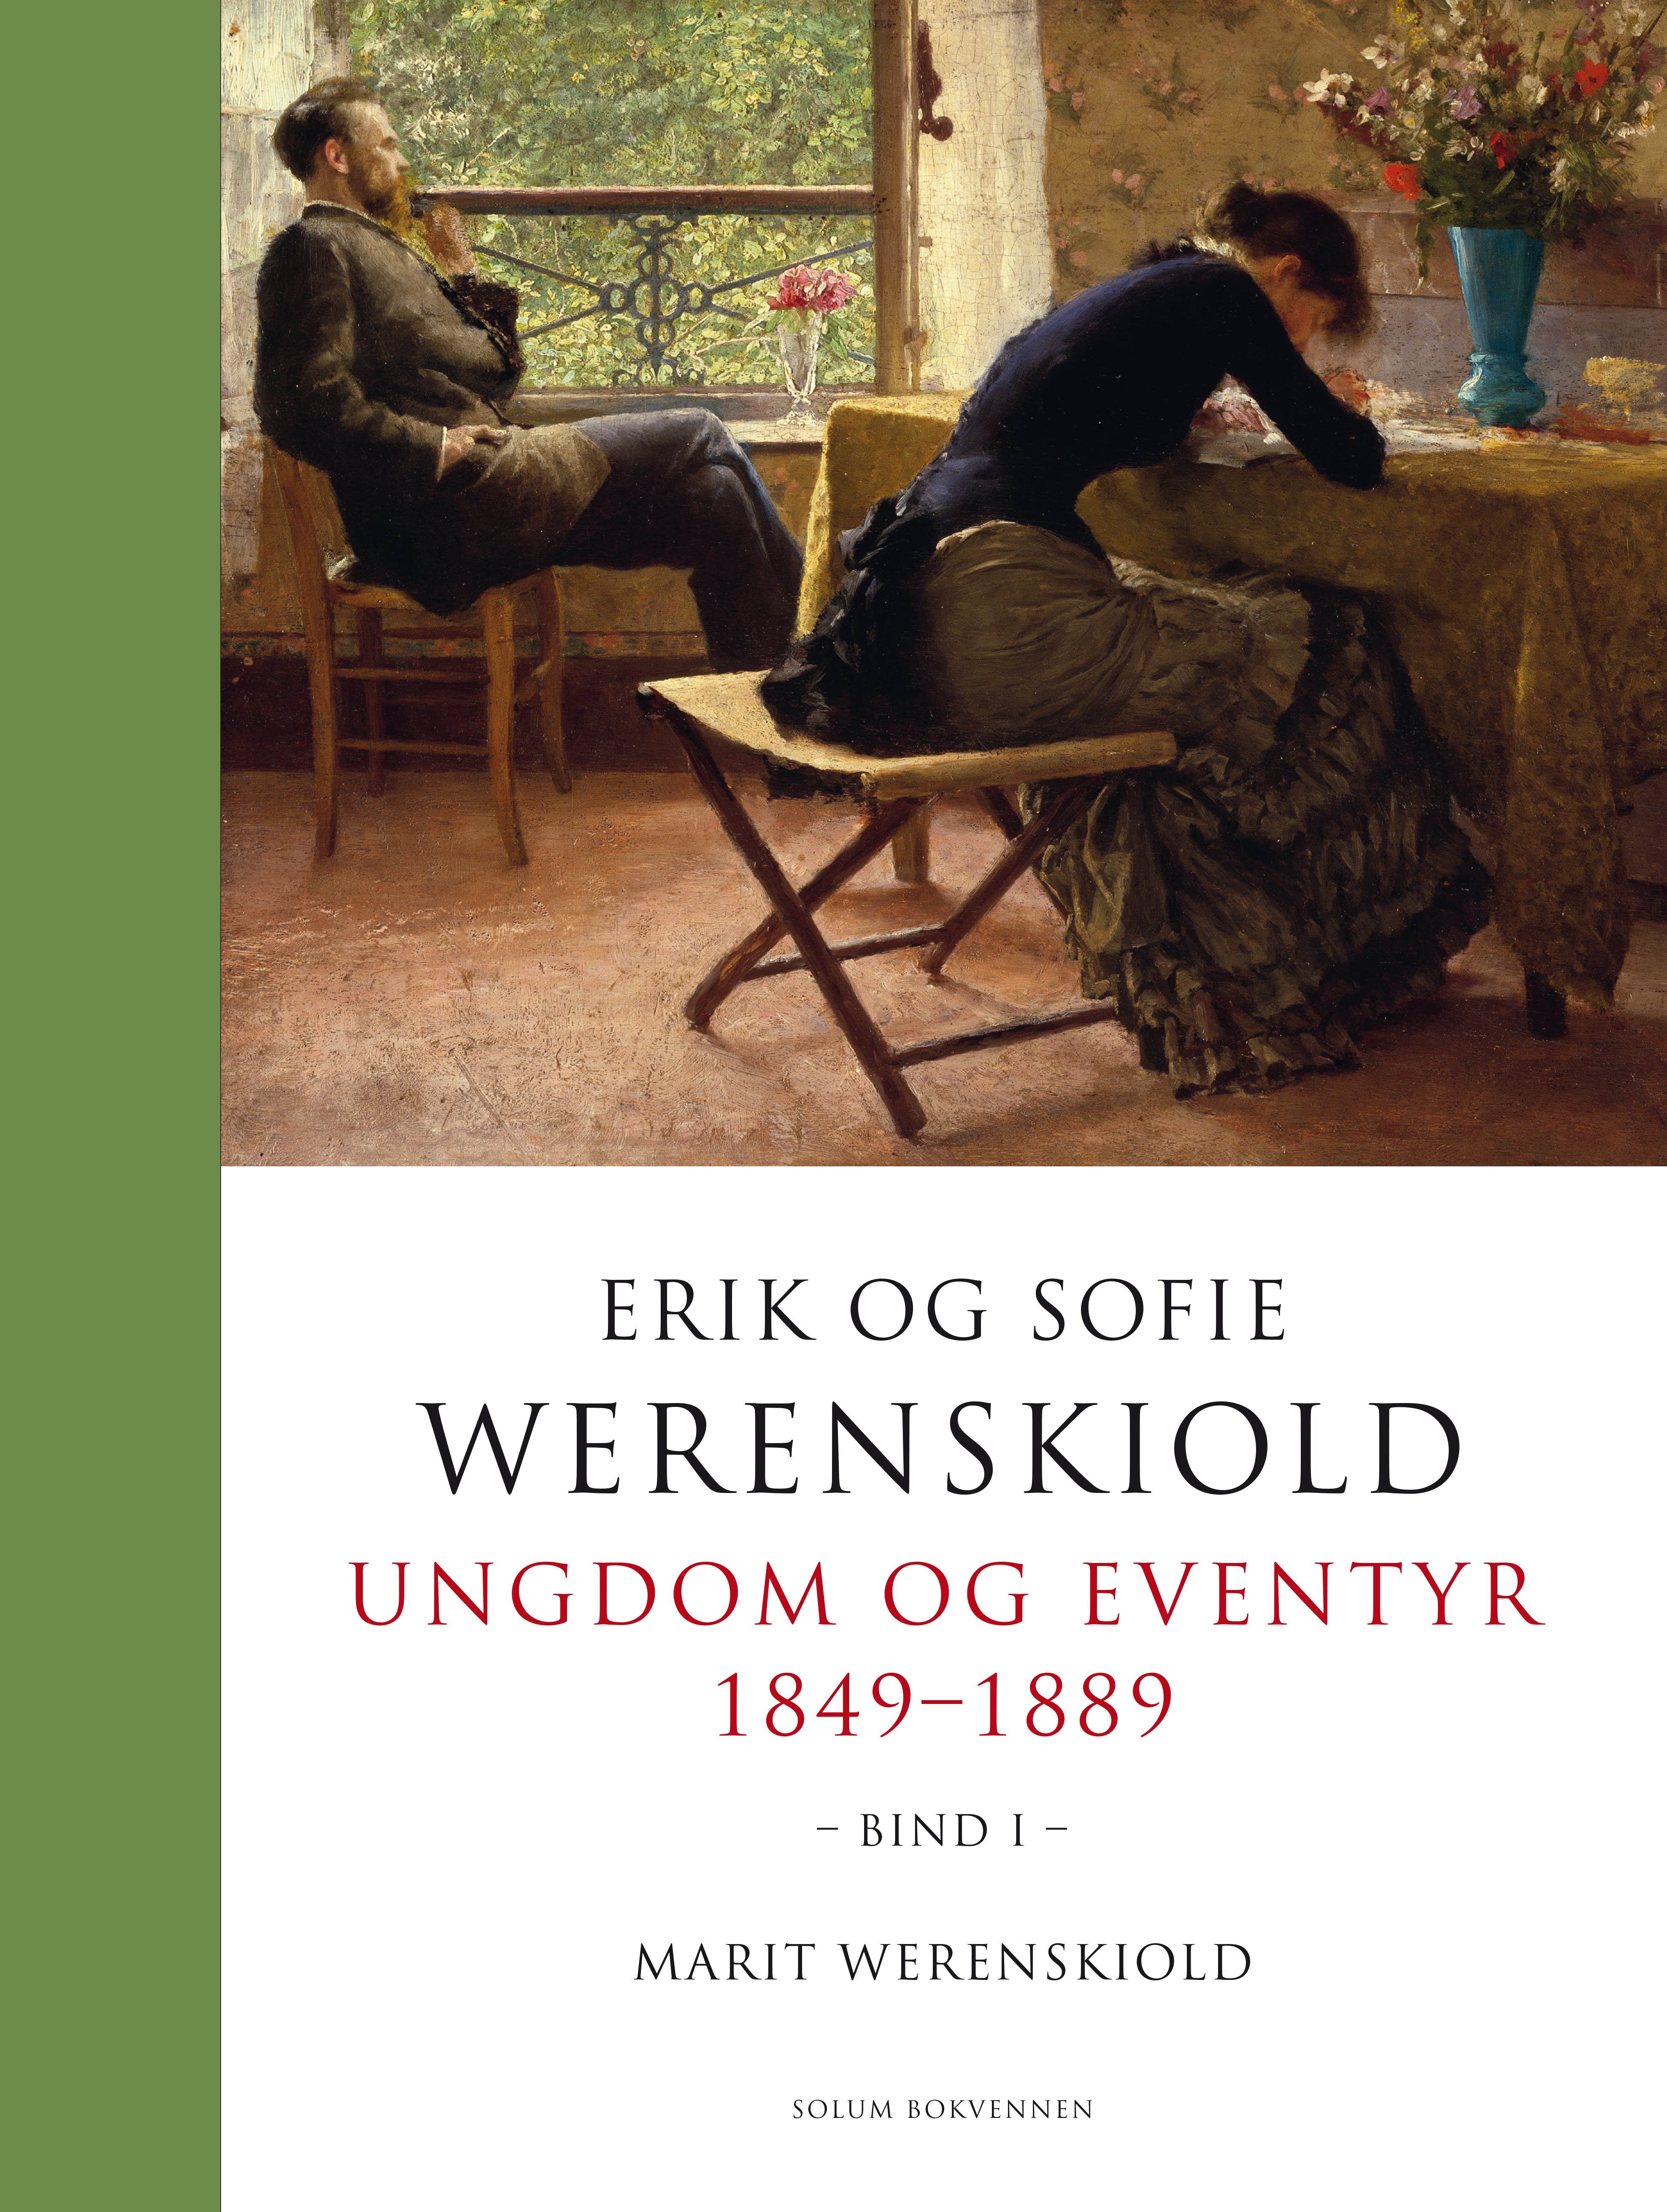 Erik og Sofie Werenskiold: Bind 1: ungdom og eventyr 1849-1889